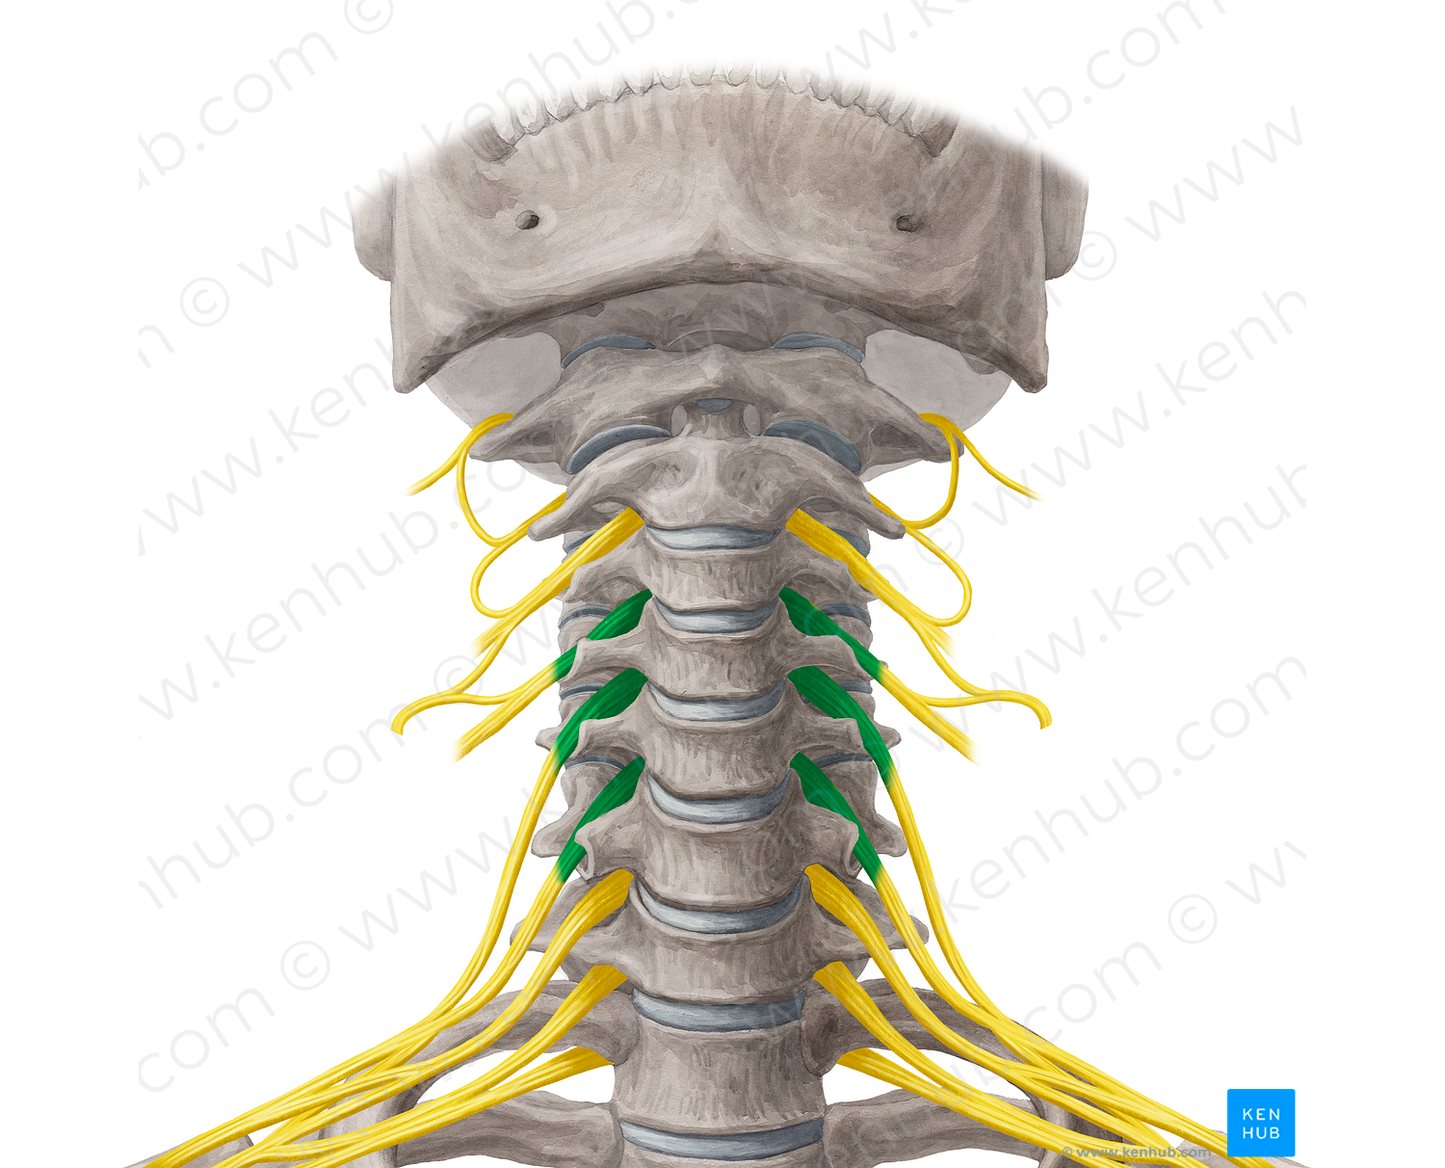 Anterior rami of spinal nerves C4-C6 (#18529)